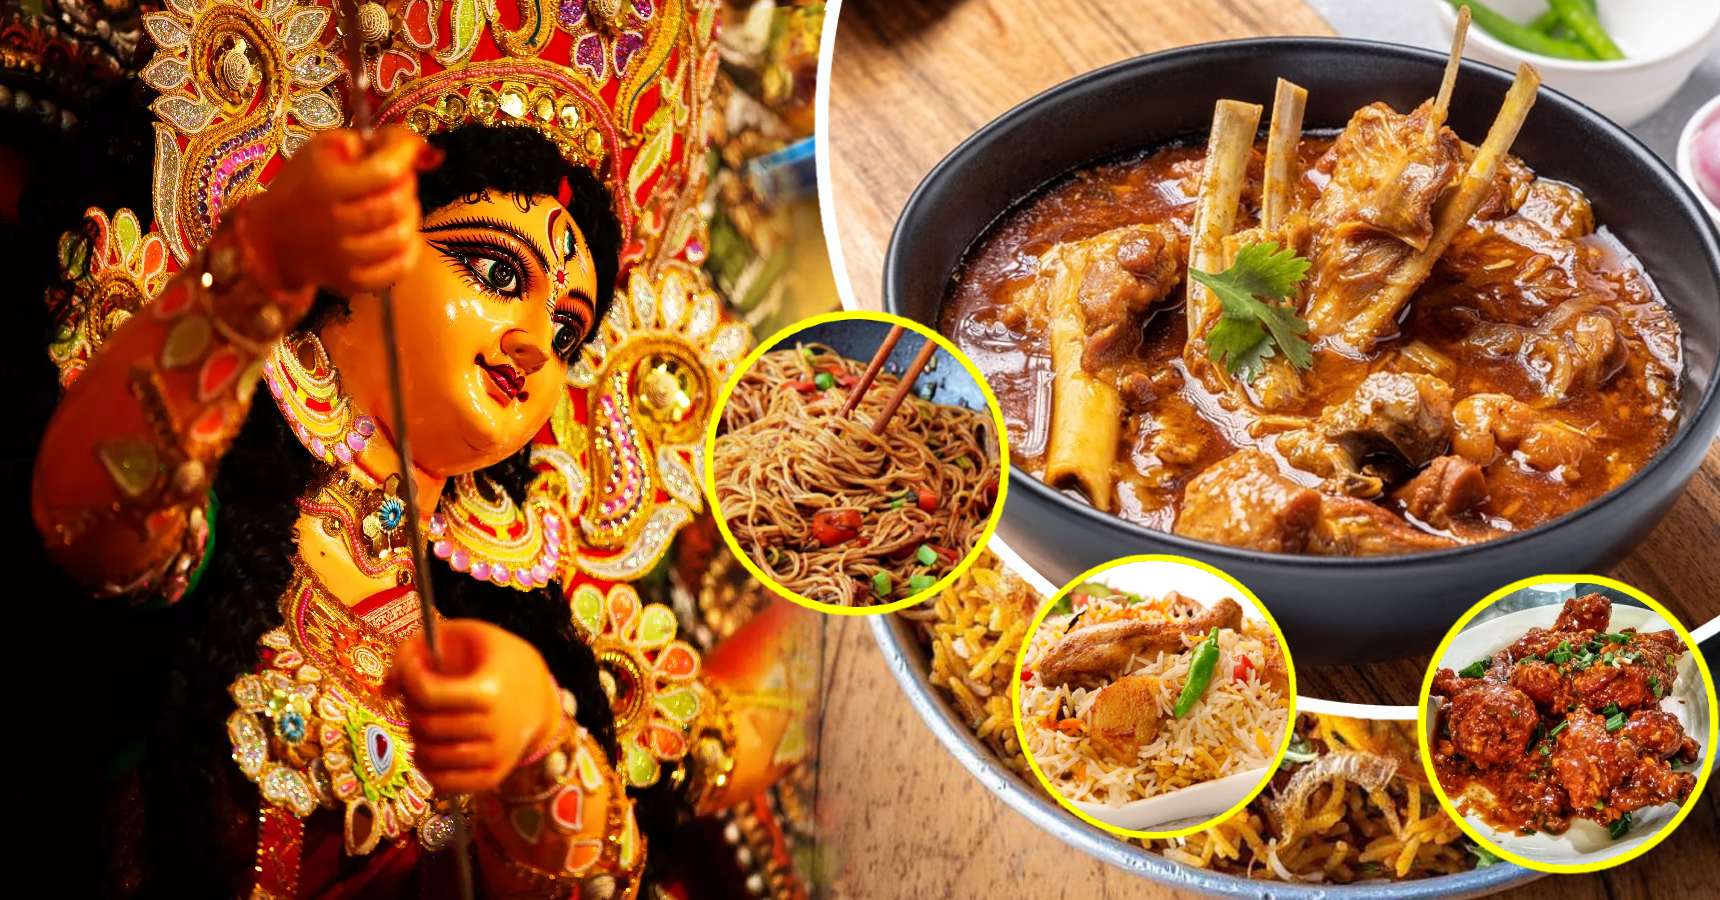 Best restaurants in Kolkata to visit during Durga Puja